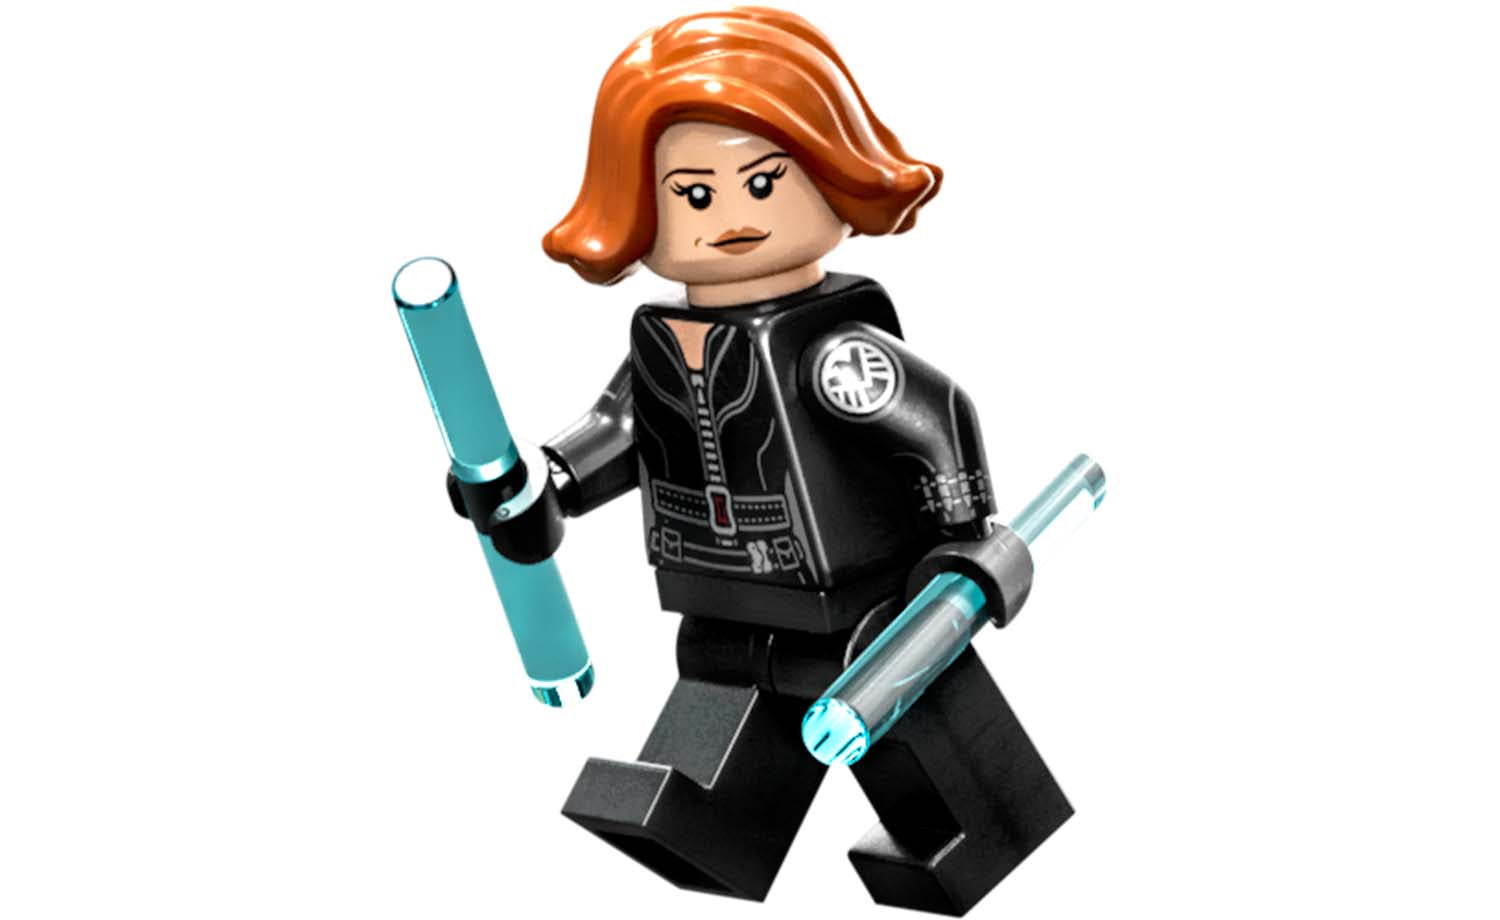 Lego®marvel super heroes™- 76248 - le quinjet des avengers